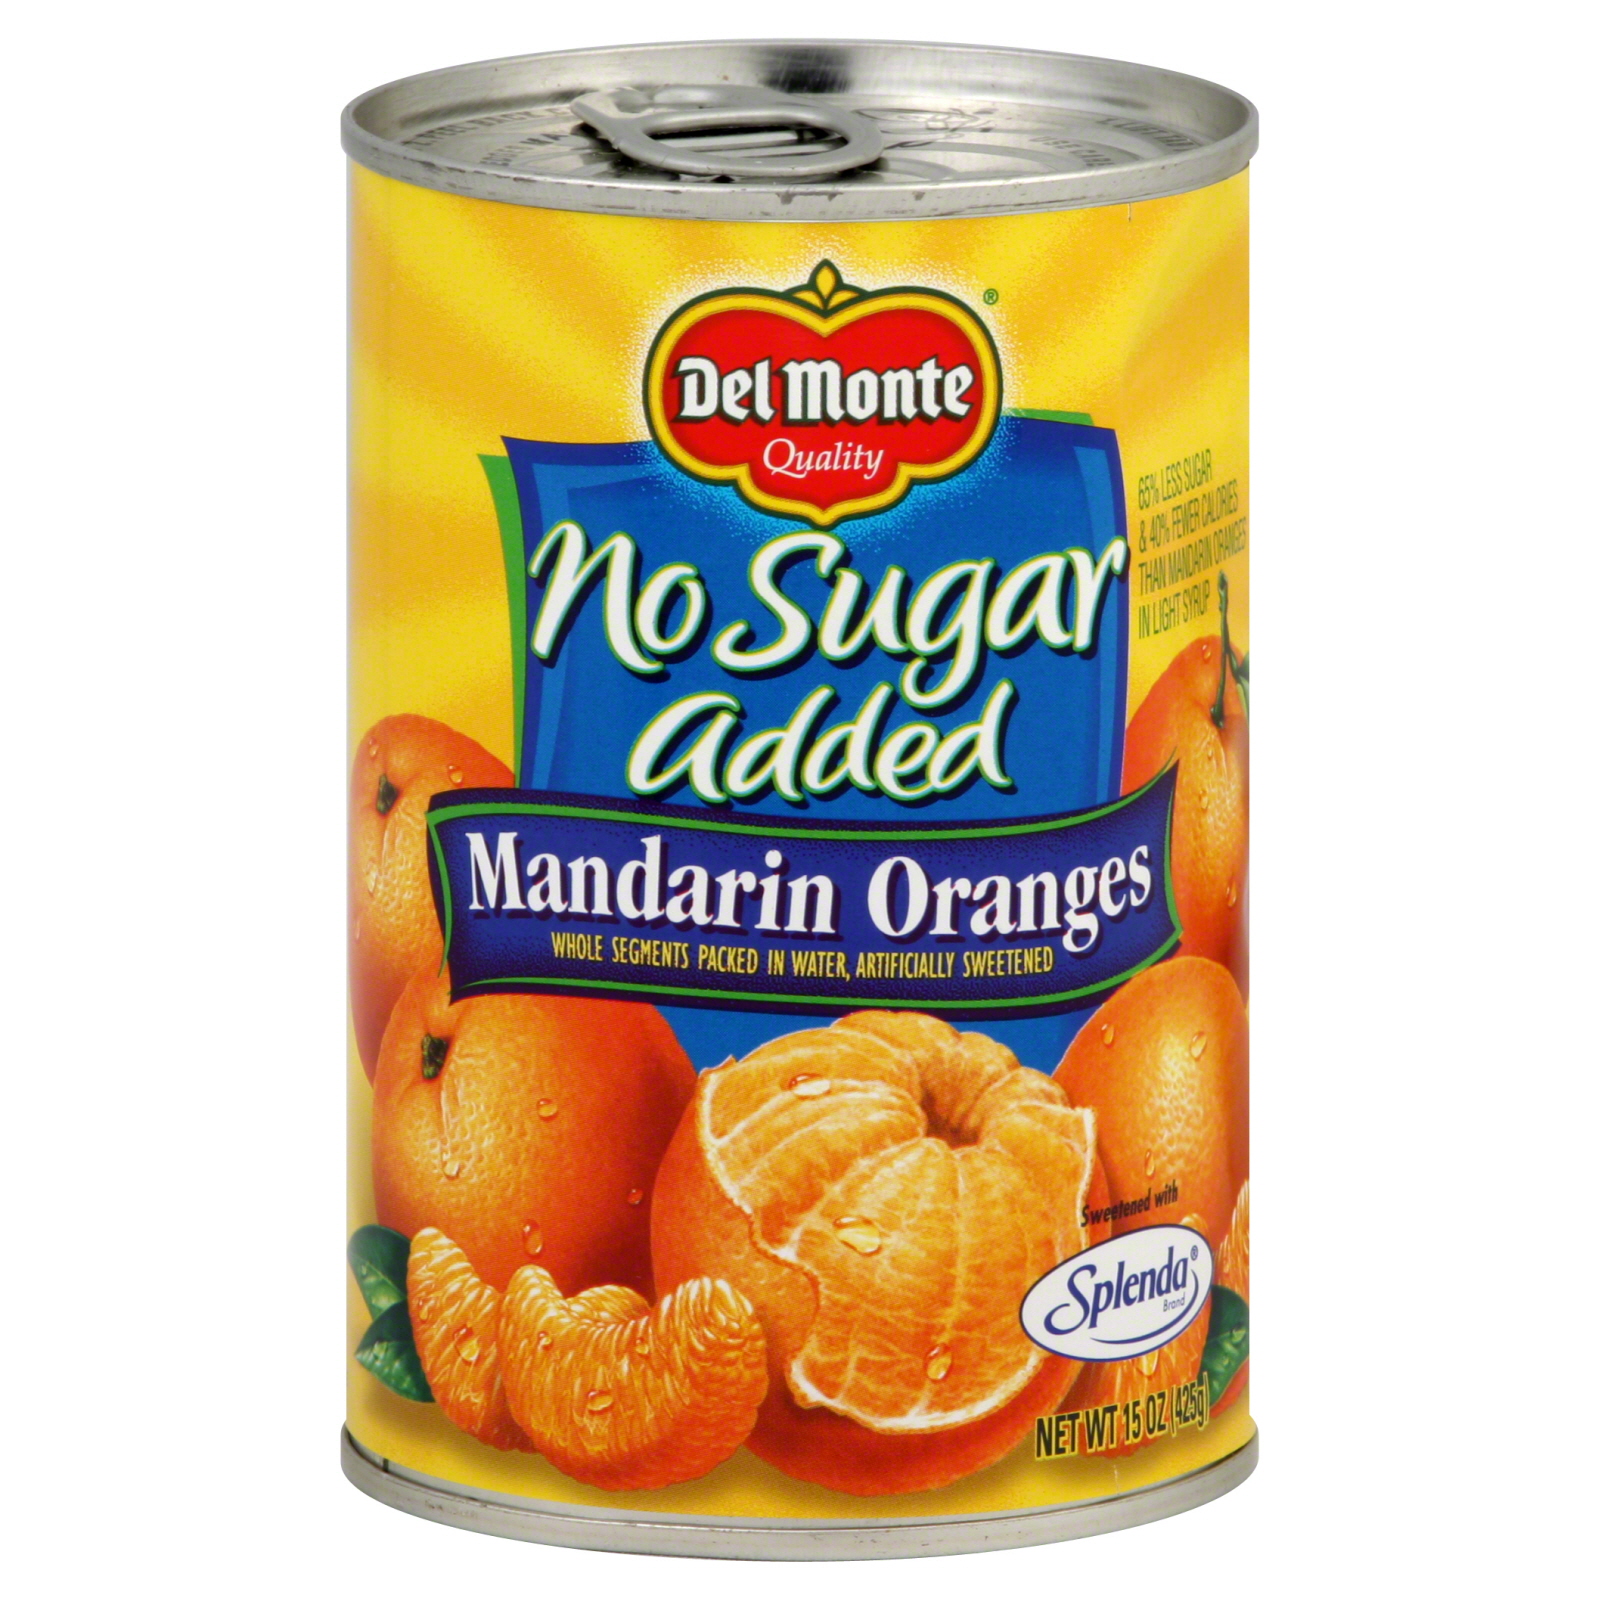 Del Monte No Sugar Added Mandarin Oranges, 15 oz (425 g)